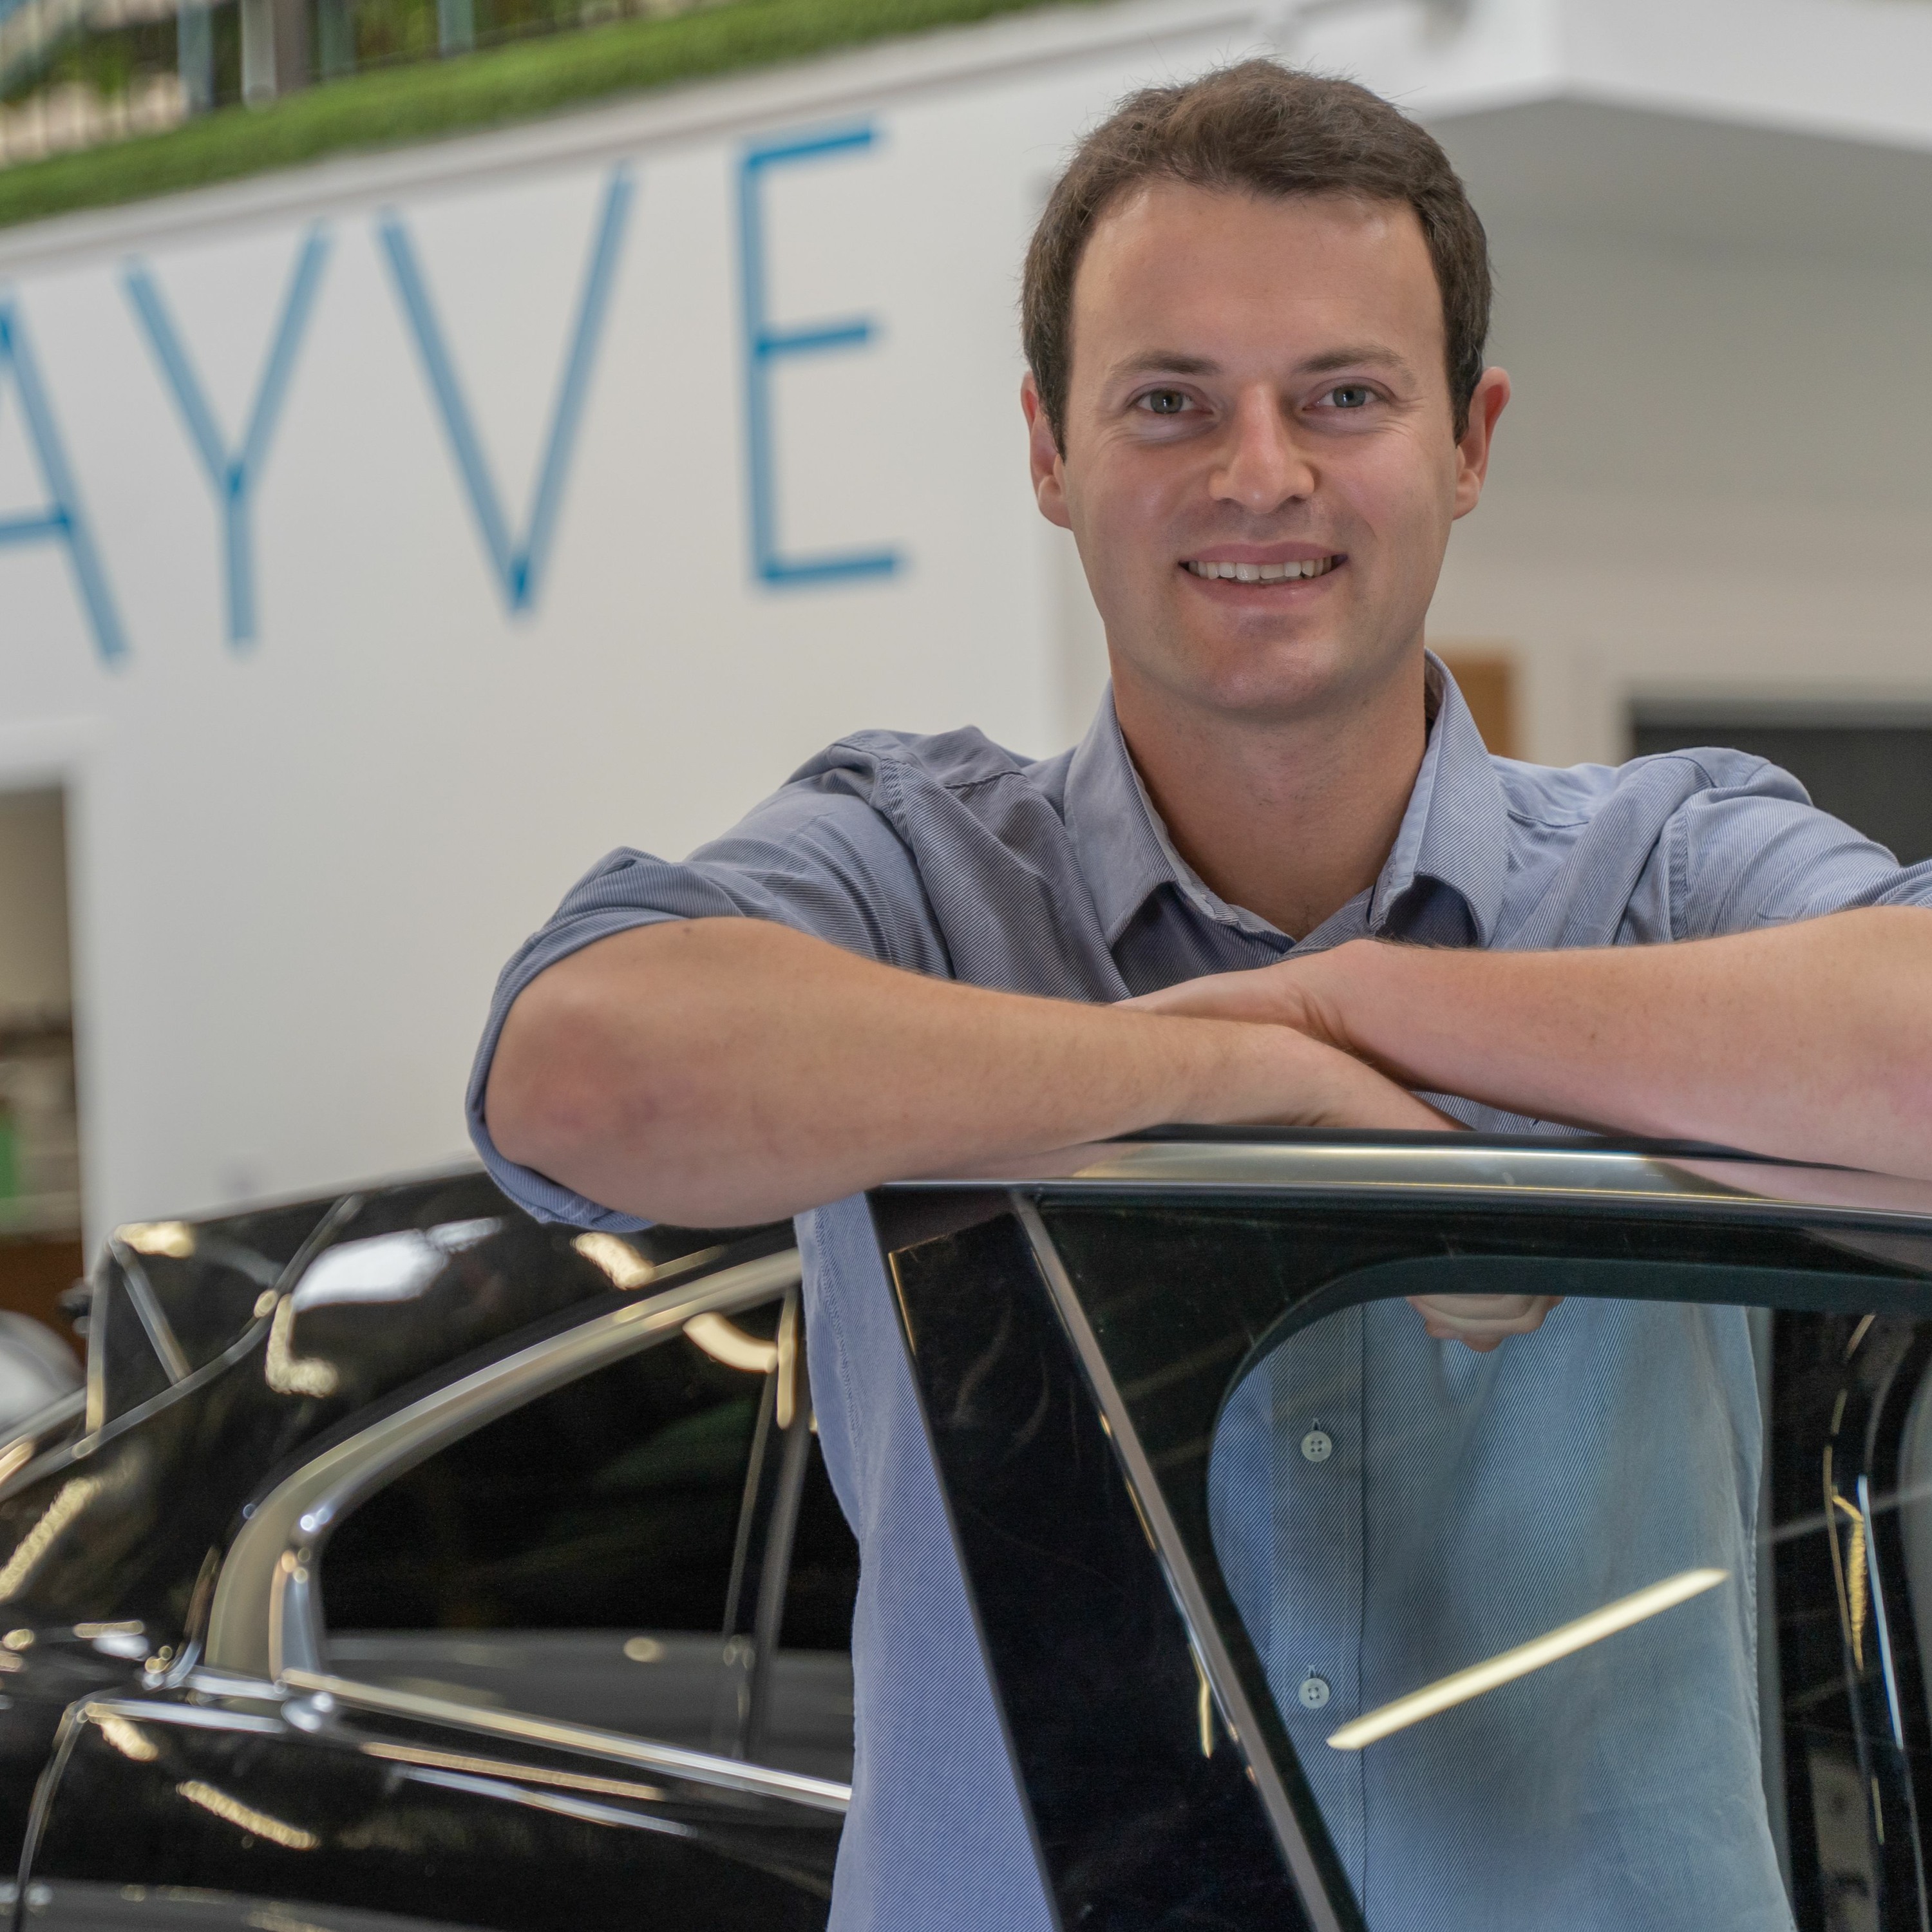 Wayve CEO Alex Kendall on Making a Splash in Autonomous Vehicles - Ep. 209